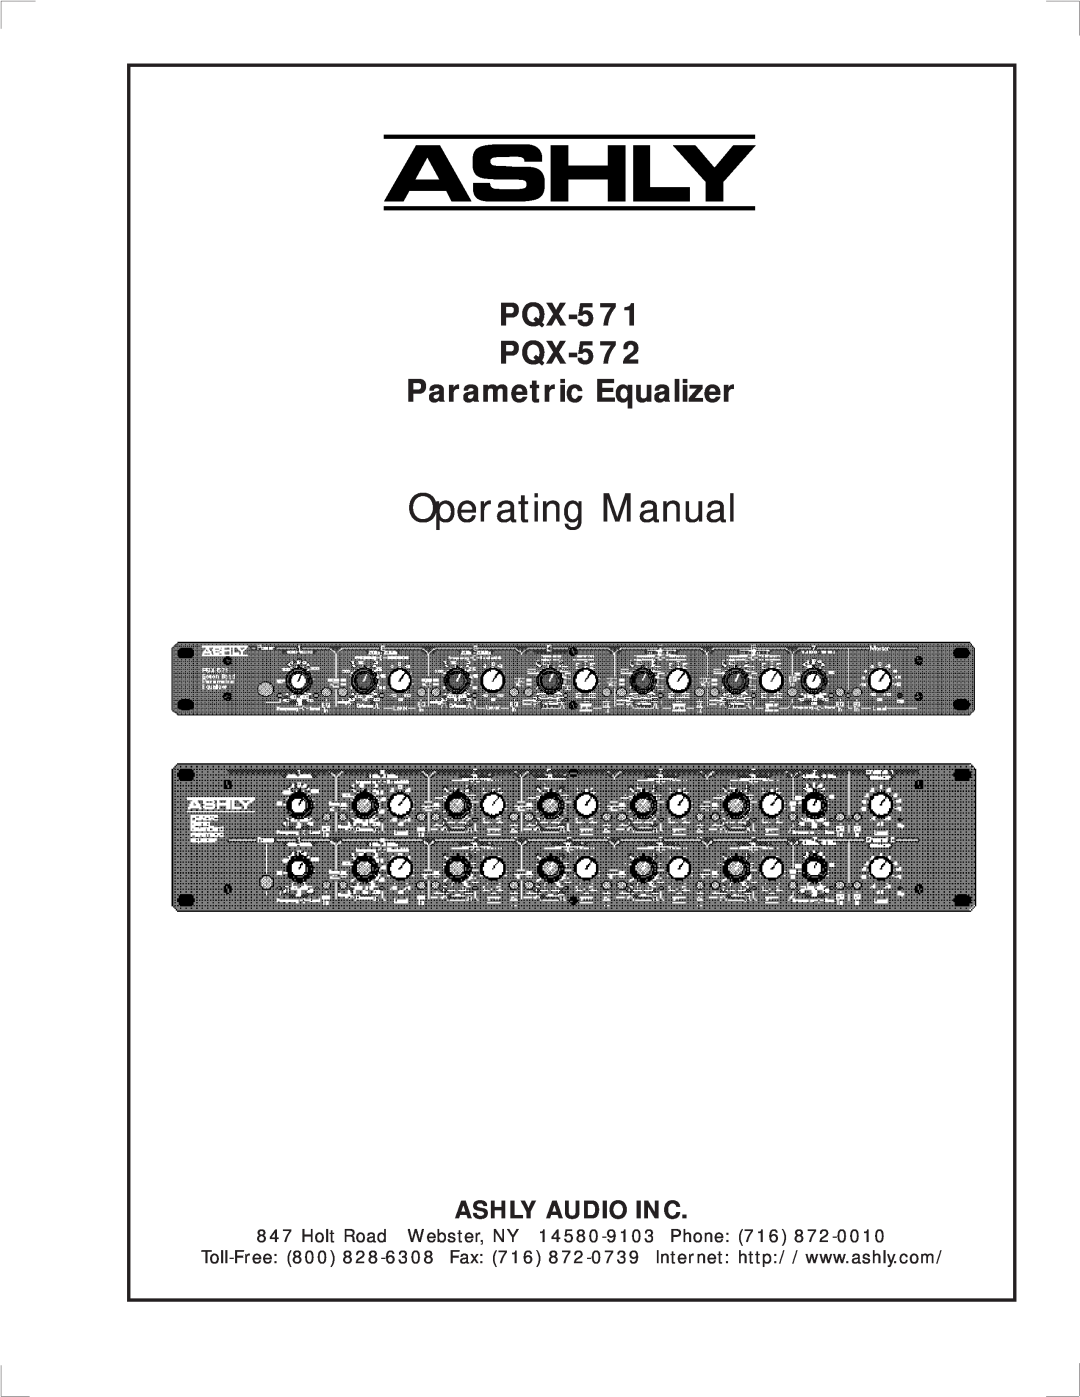 Ashly manual PQX-571 PQX-572 Parametric Equalizer, Operating Manual, Ashly Audio Inc 